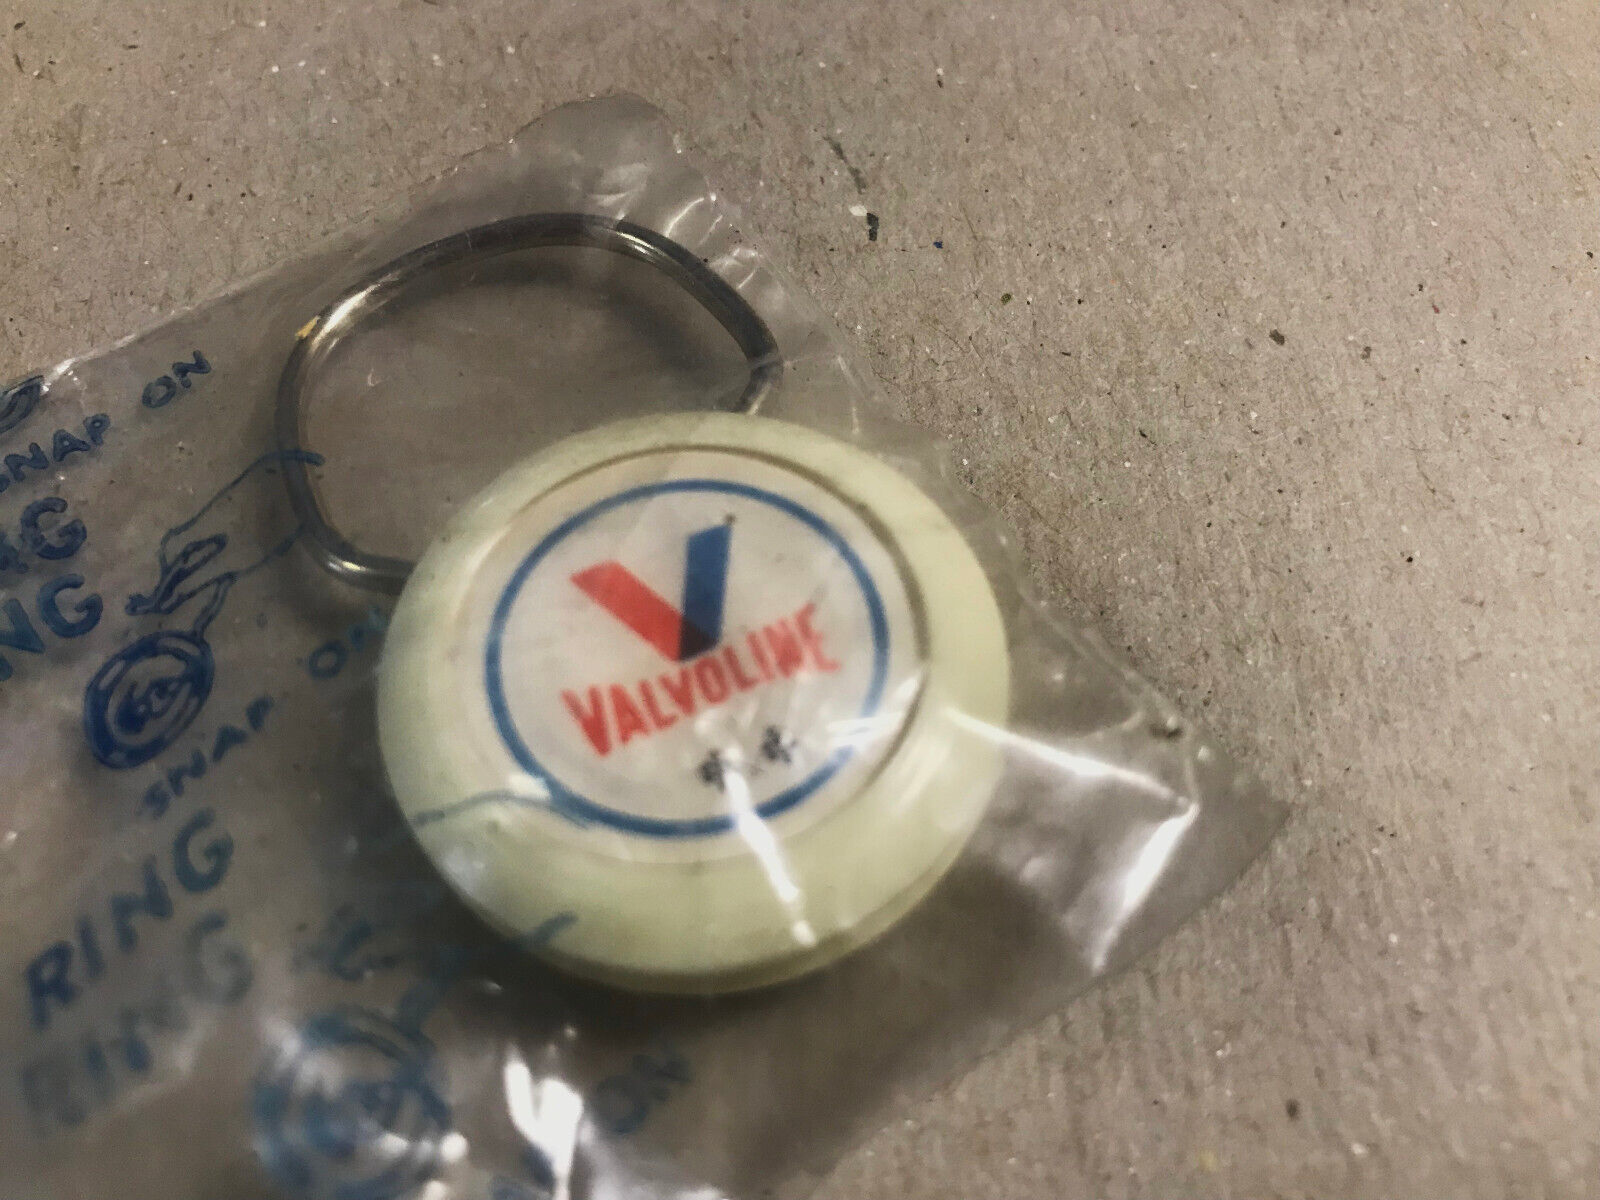 NOS Vintage Valvoline Racing Automotive Show Ring Key Ring Advertising Keychain